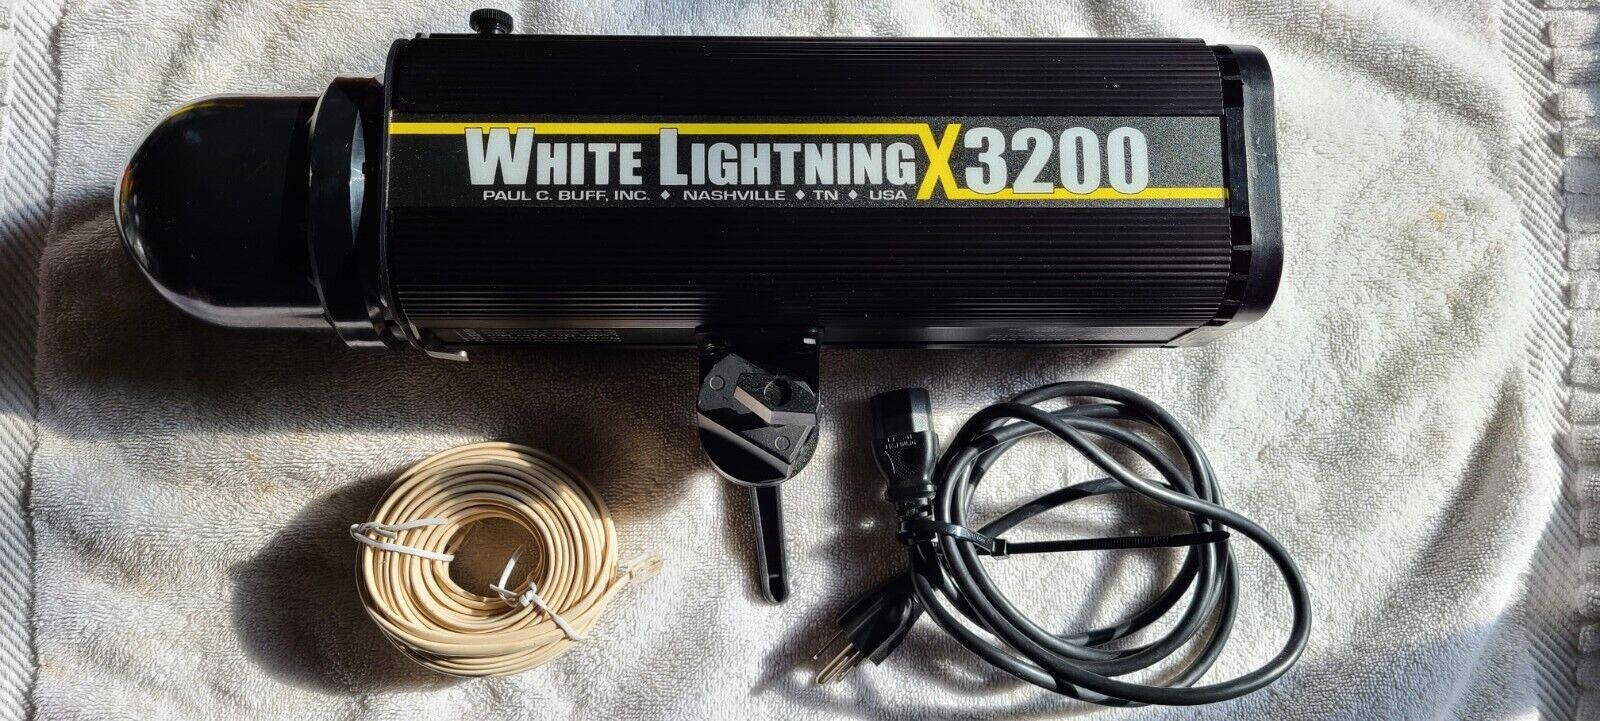 Paul C Buff White Lightning X3200 Flash Unit    120V  8A   1320WS  250W Max Lamp